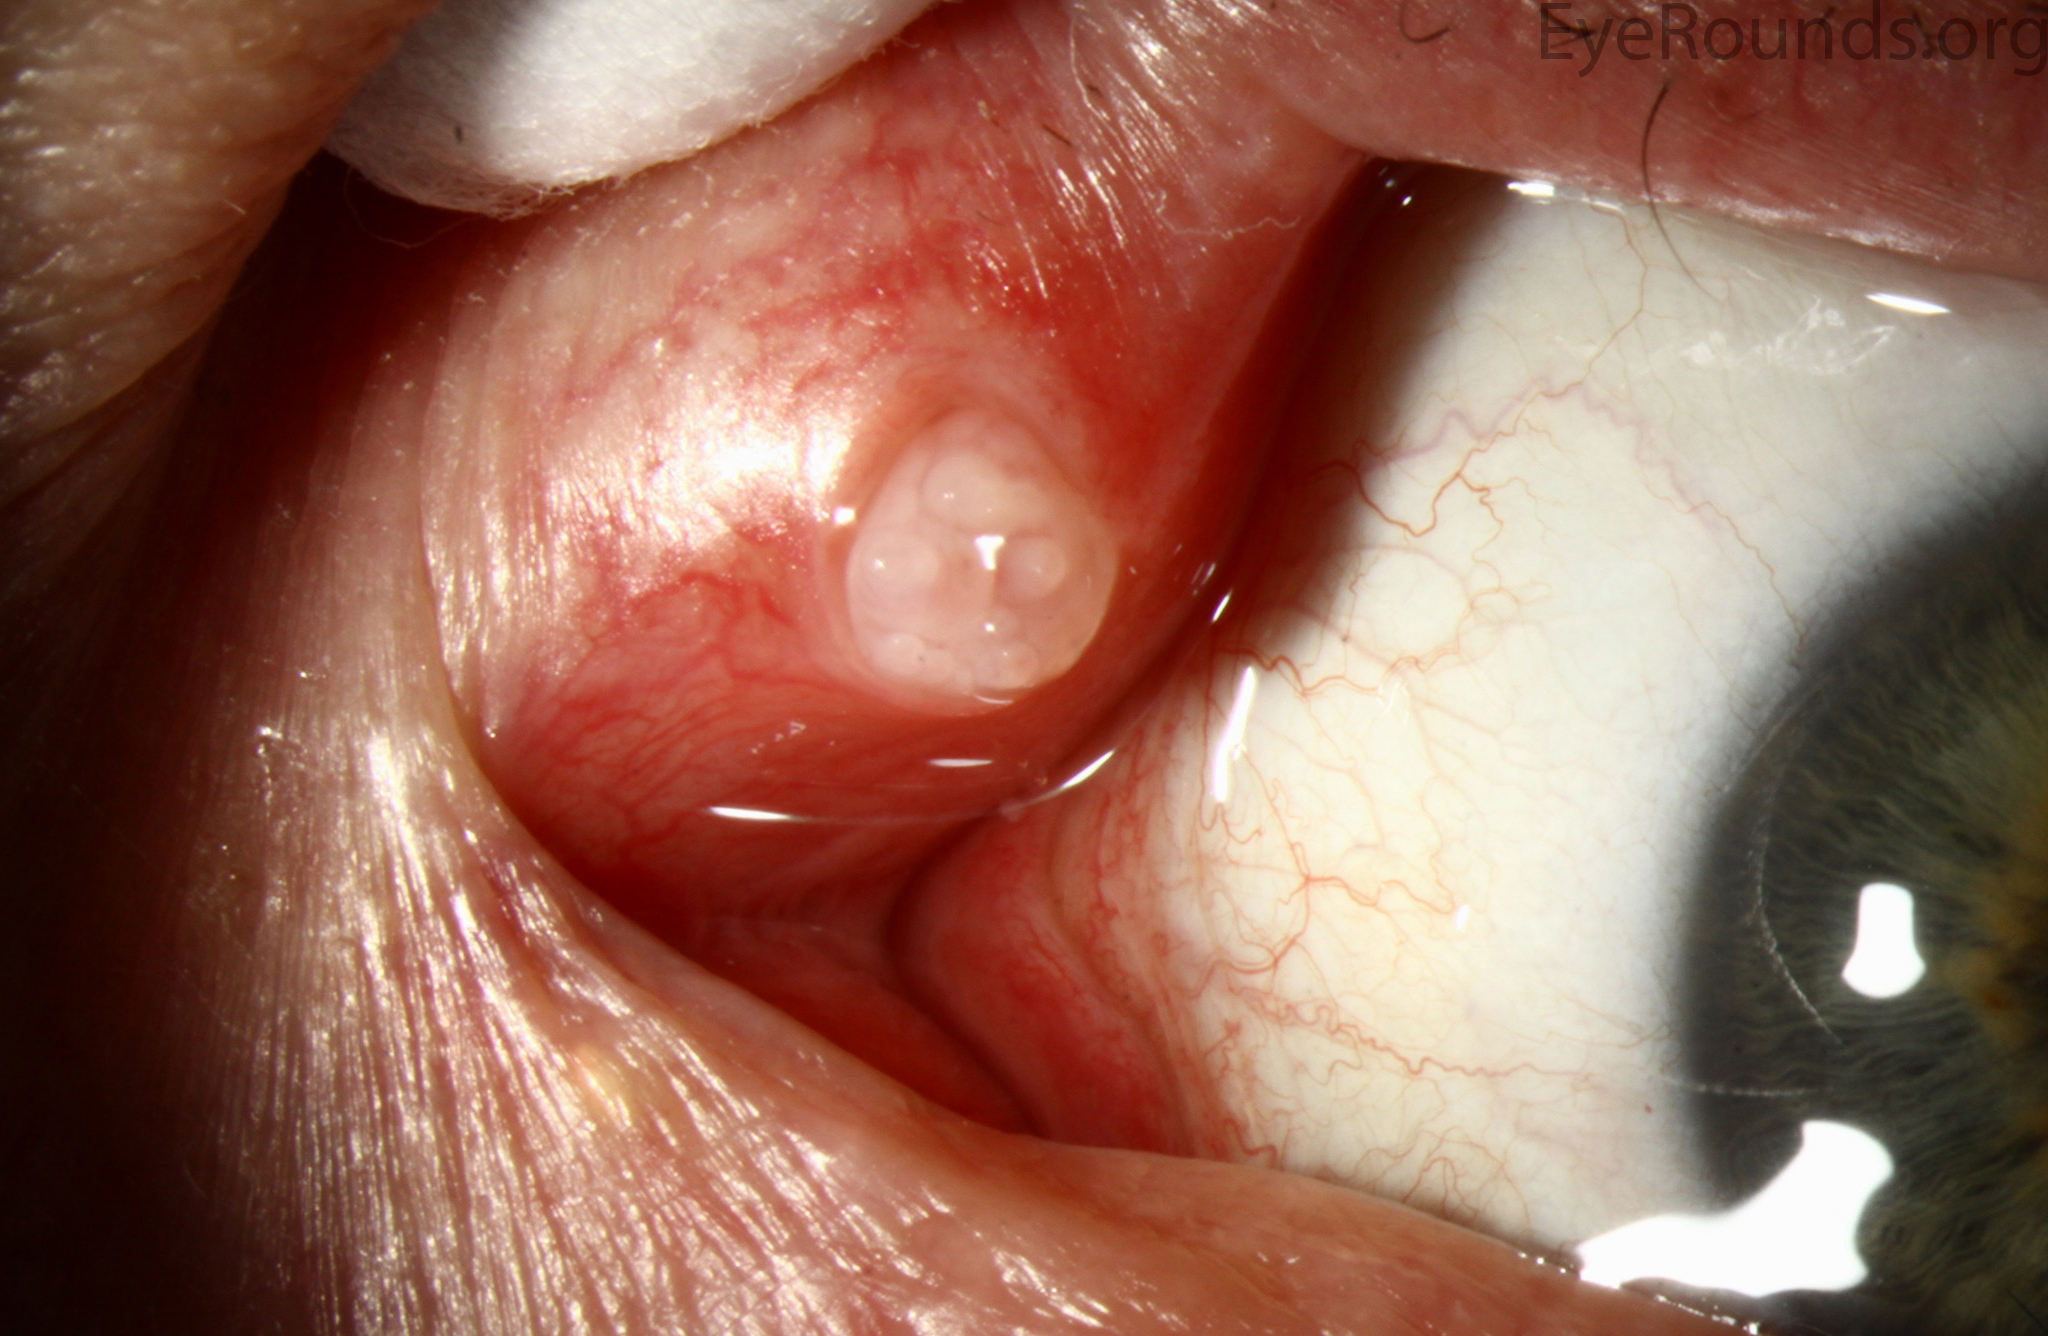 Benign squamous papilloma lesion